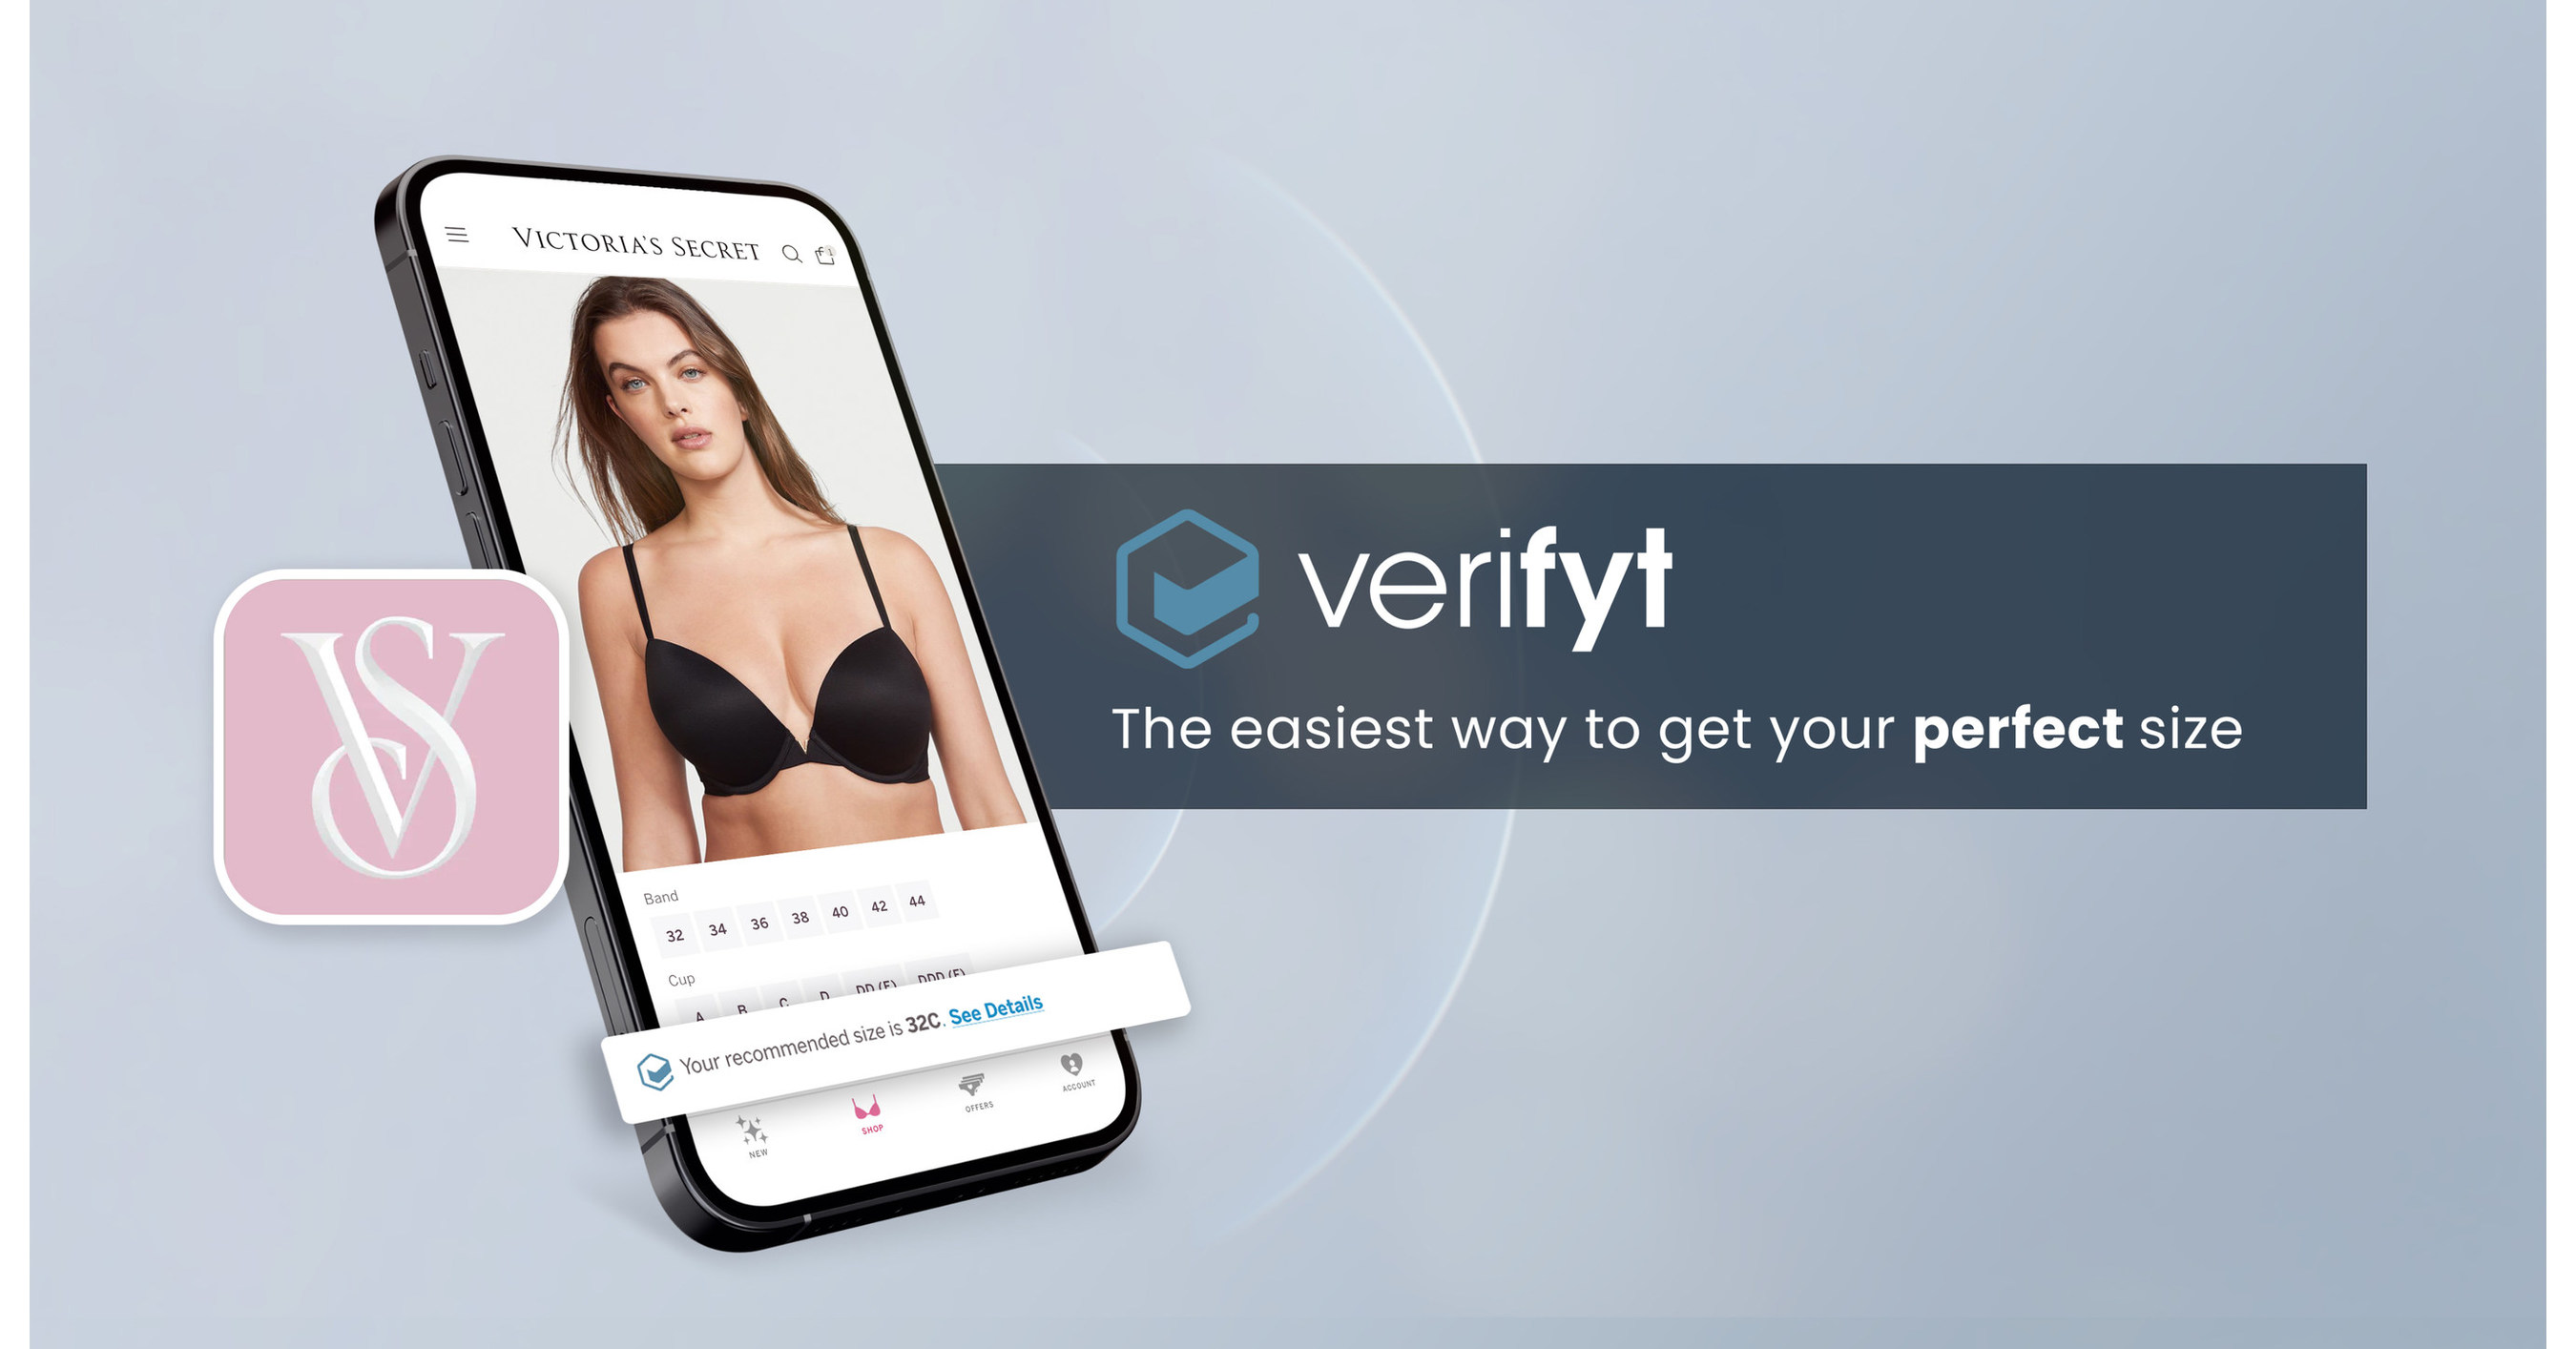 NetVirta Announces Partnership with Victoria's Secret